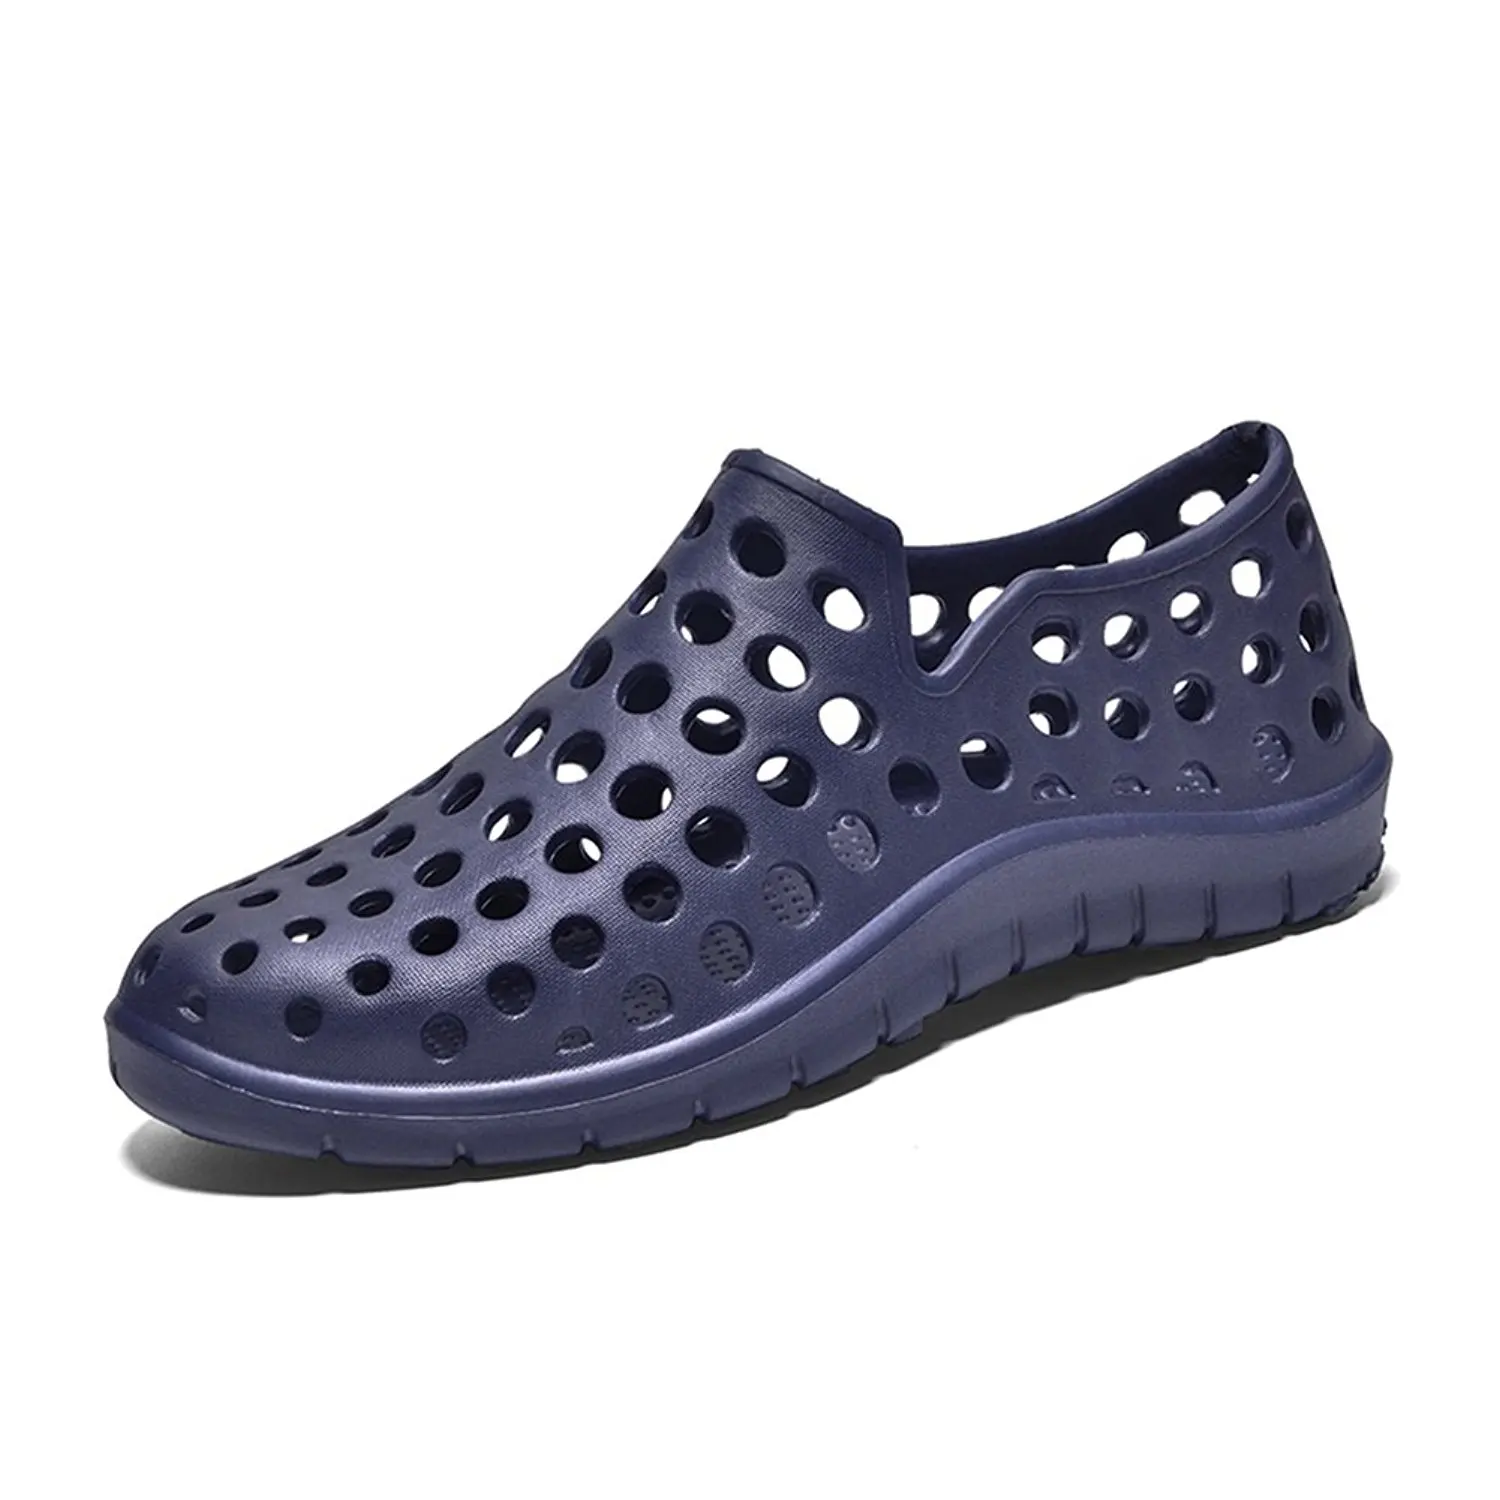 Cheap Flip Shoes, find Flip Shoes deals on line at Alibaba.com